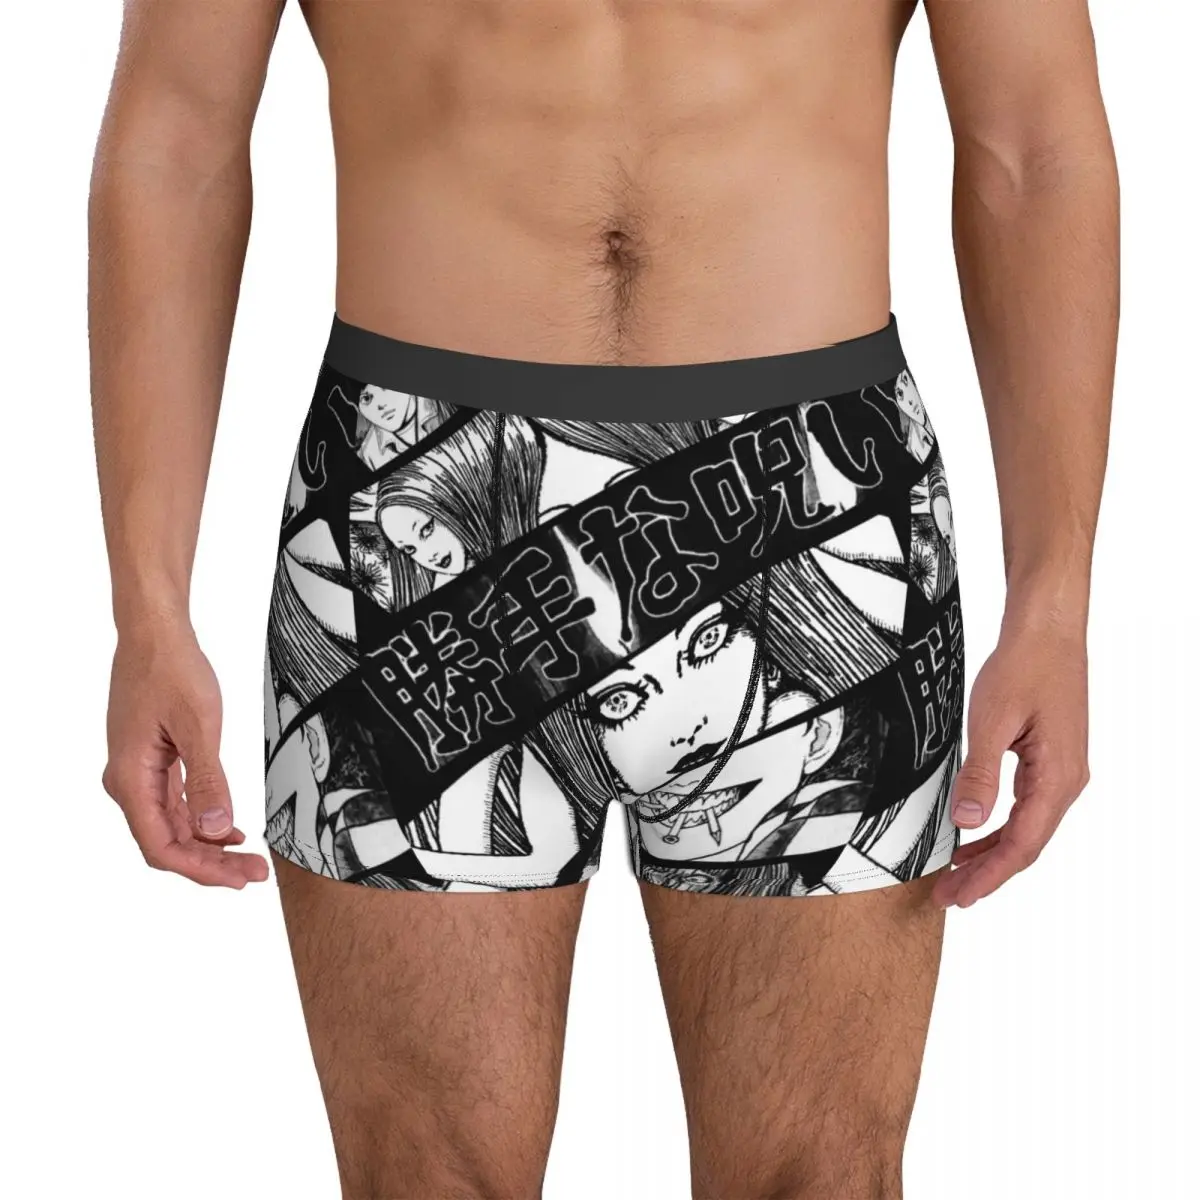 Junji Ito Mix Underwear spiral horror uzumaki souichi Comfortable Underpants Design Boxer Brief Pouch Men's Plus Size Trunk